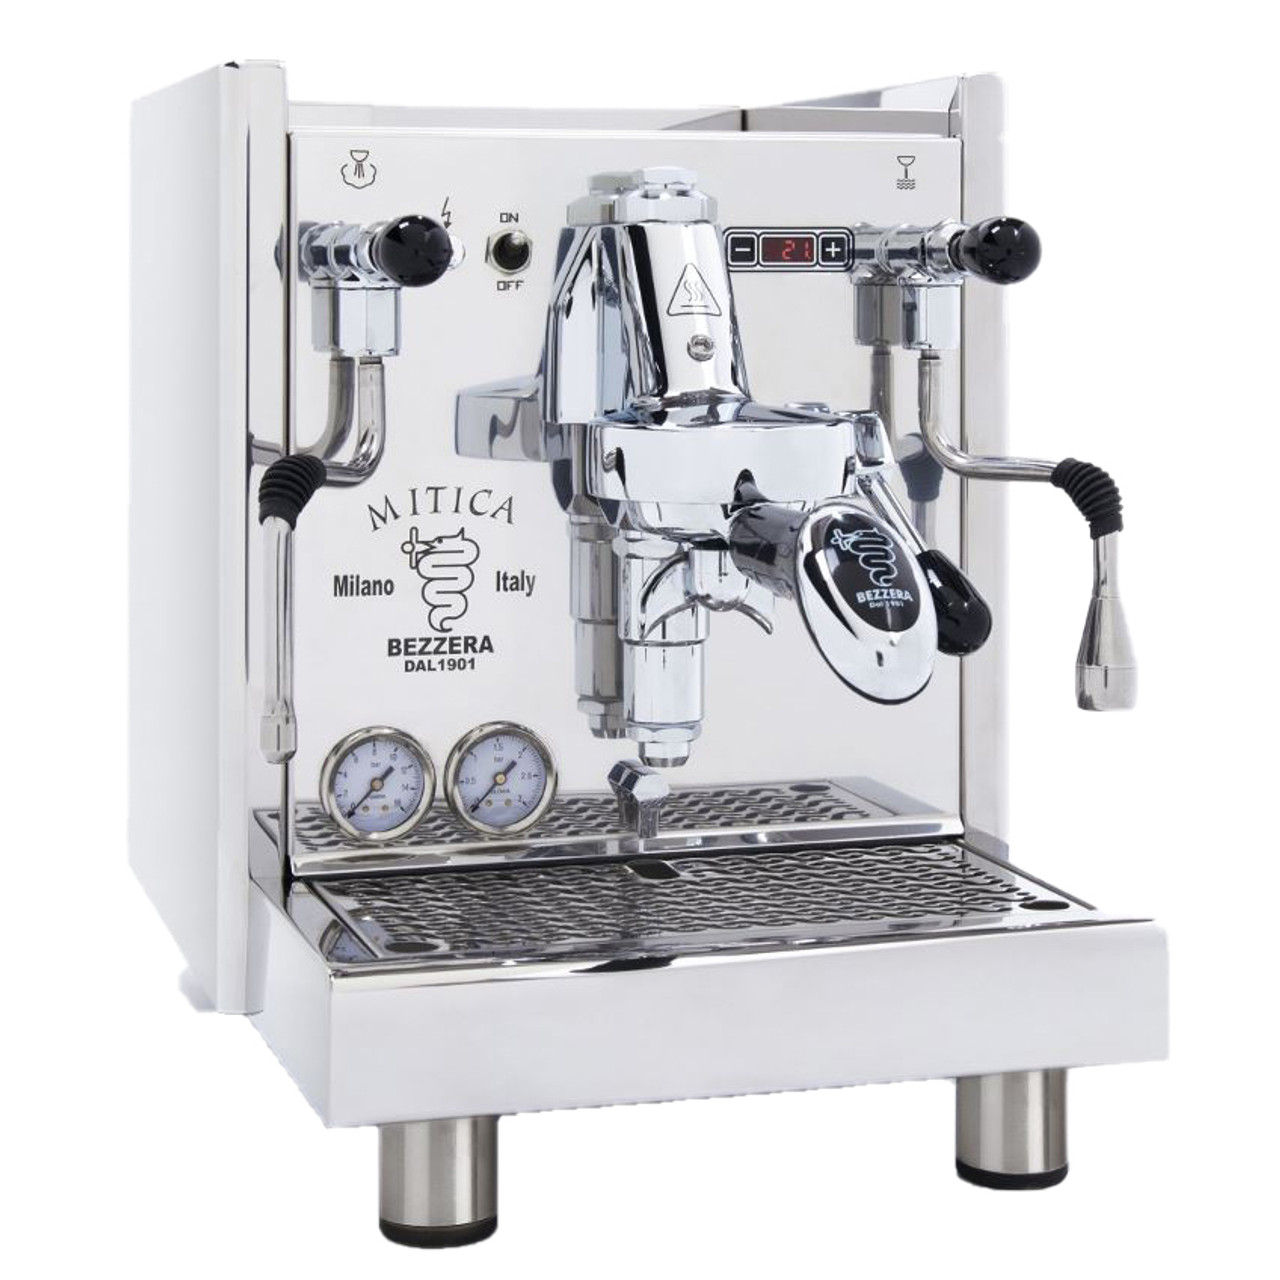 Mitica PID Commercial Espresso Machine - manual, HX boiler, tank / connect, rotary